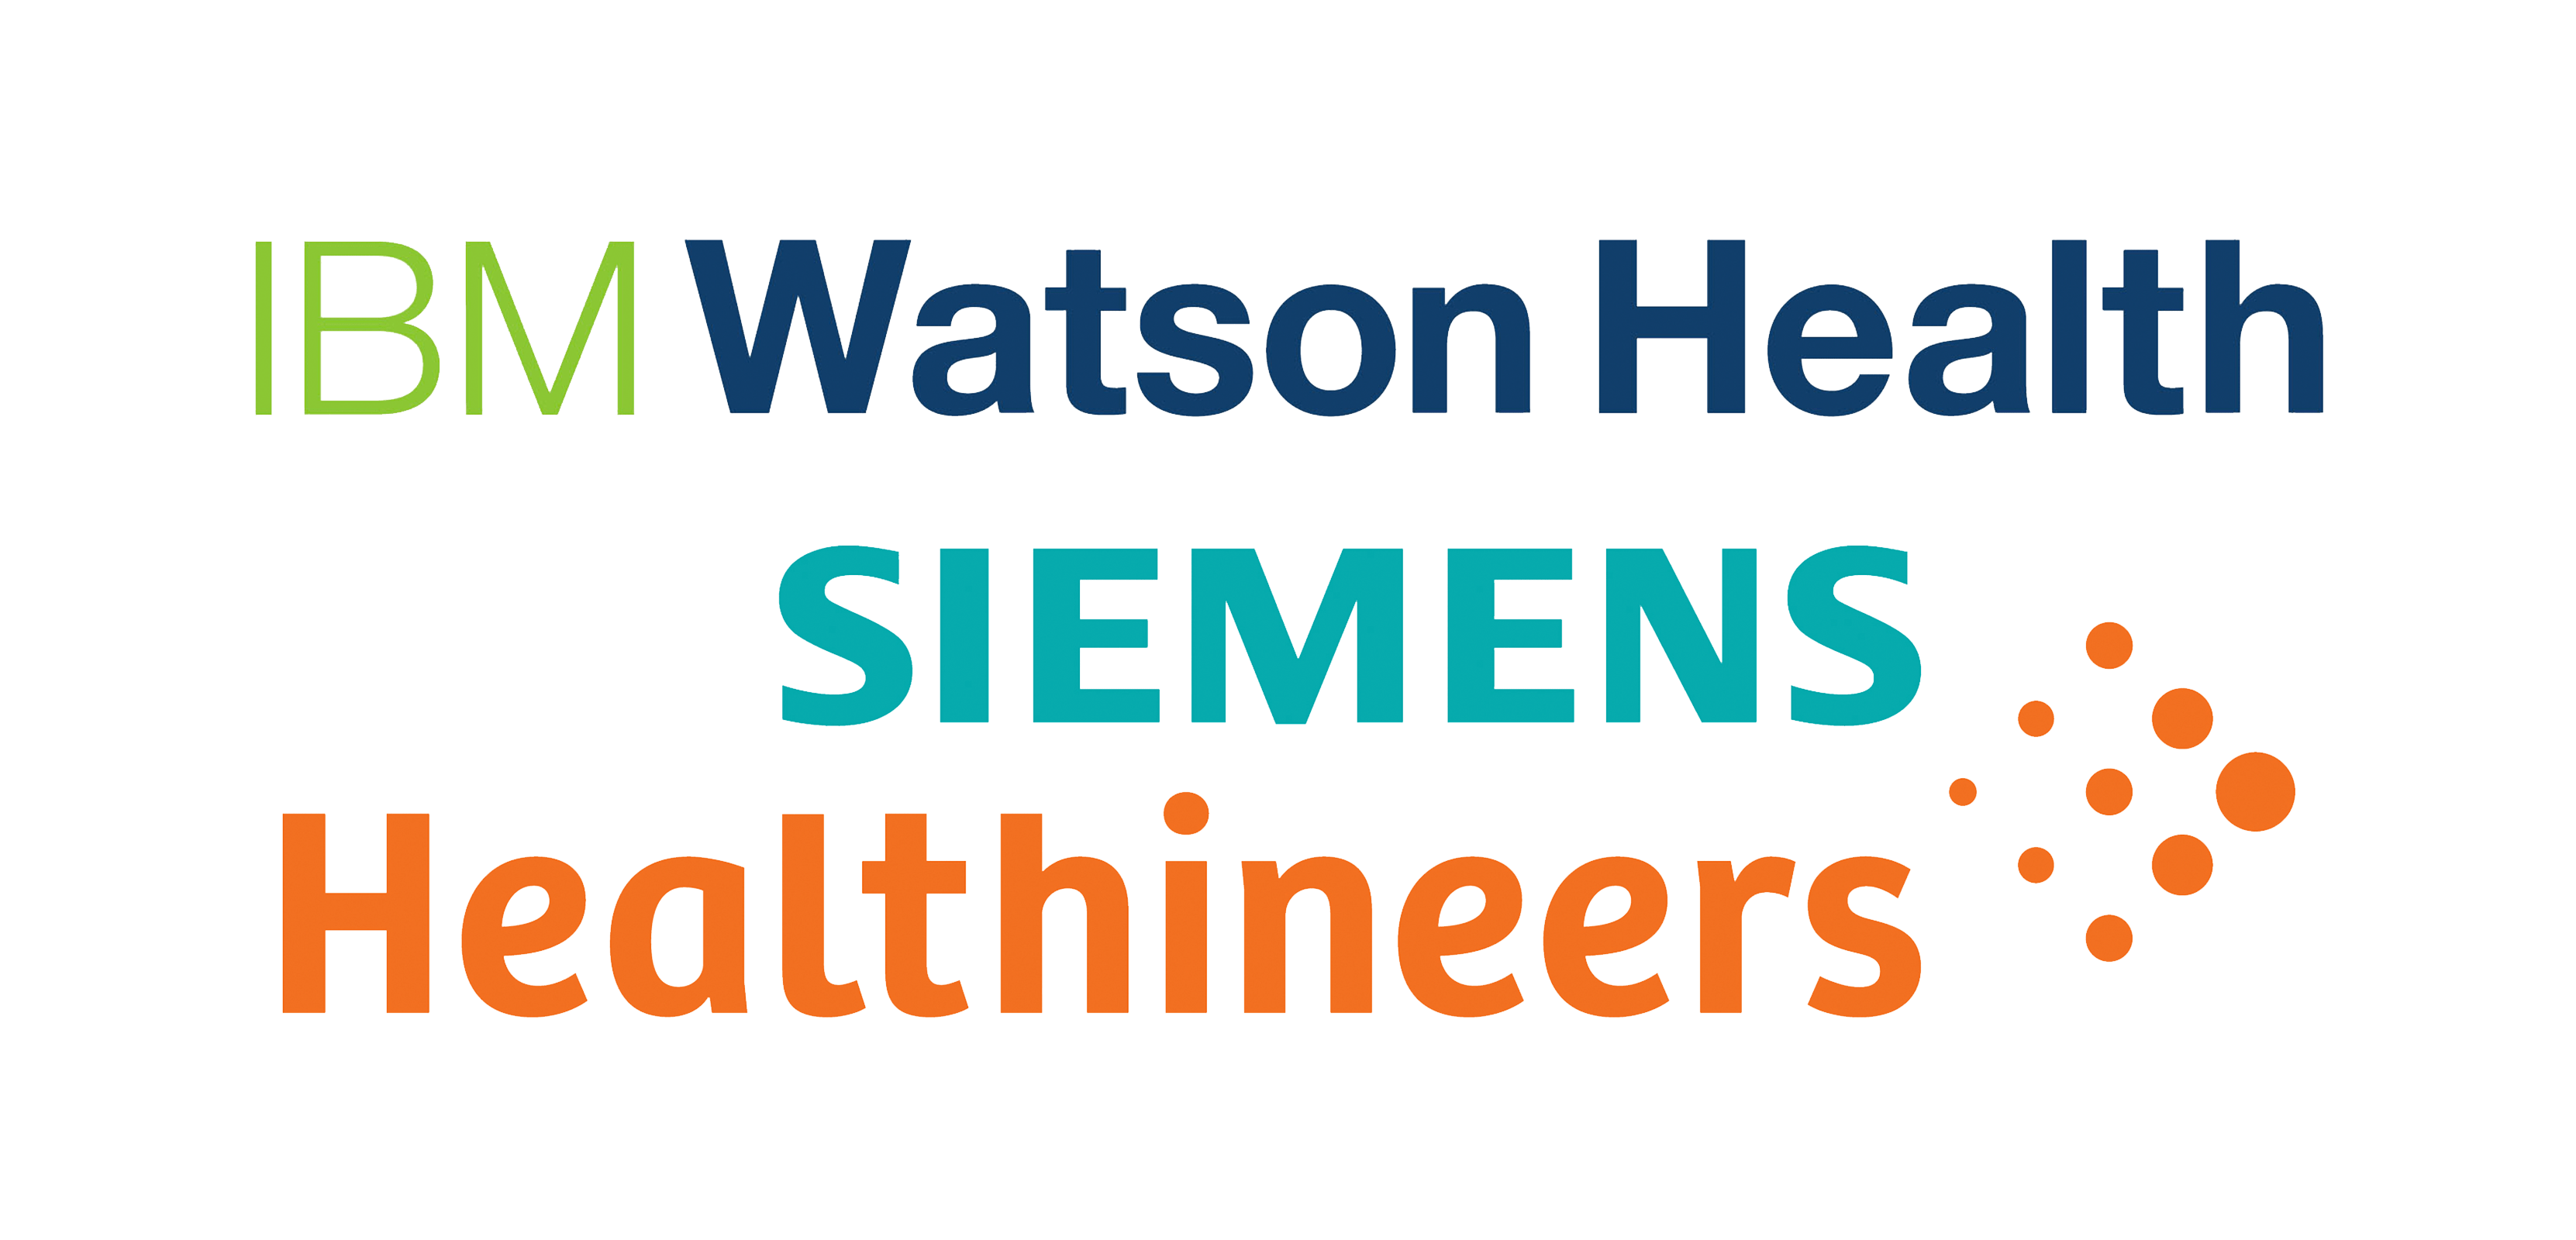 IBM Watson Health Logo - IBM News room - IBM Watson Health and Siemens Healthineers logo ...